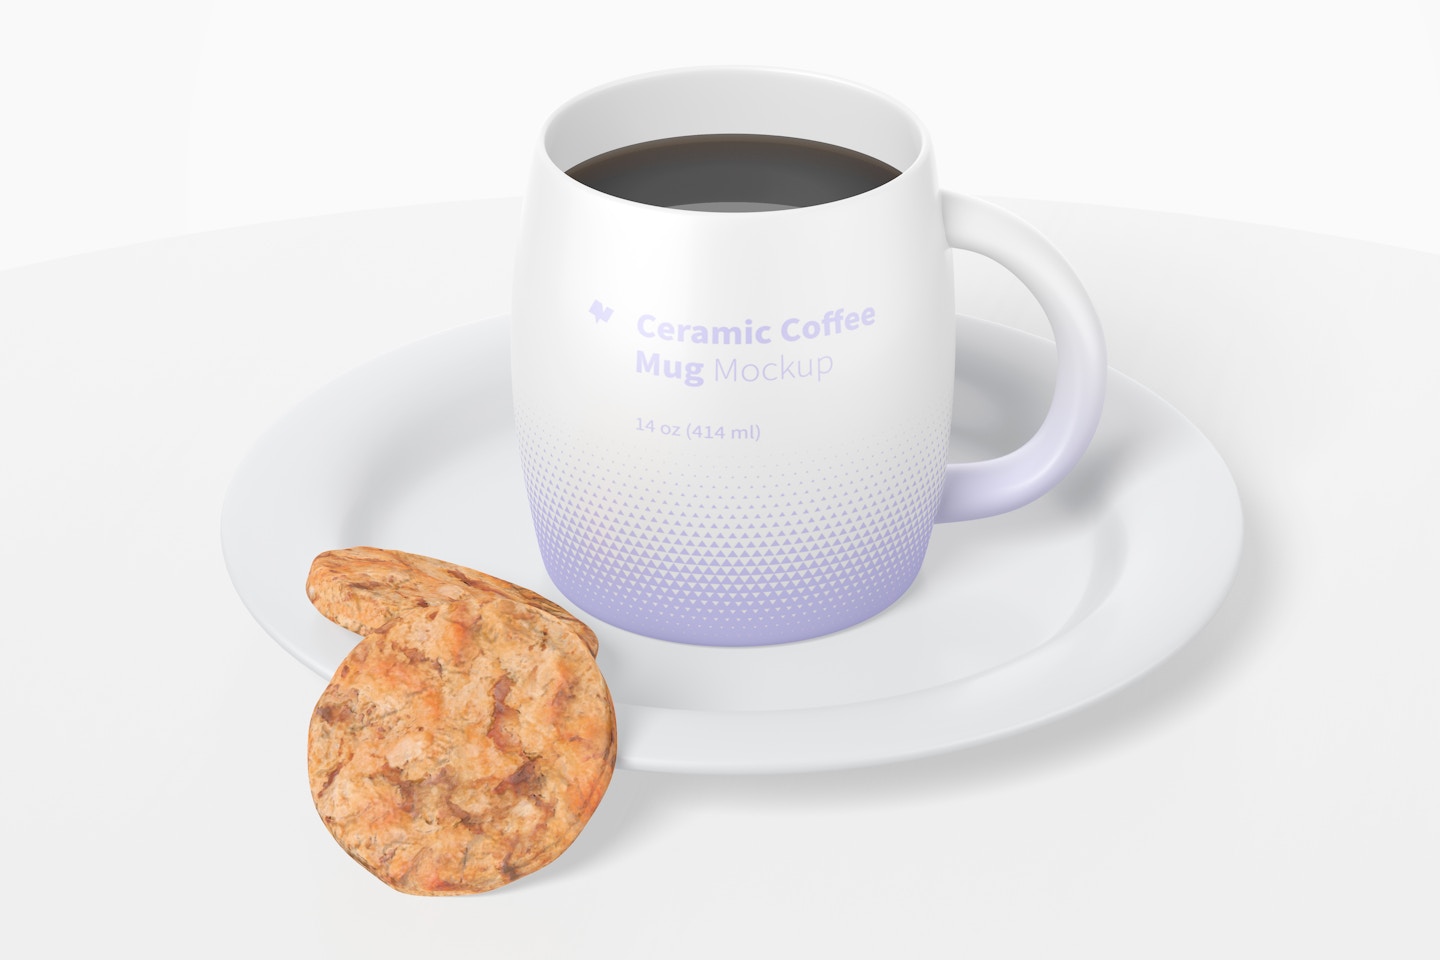 14 oz Ceramic Coffee Mug with Cookies Mockup